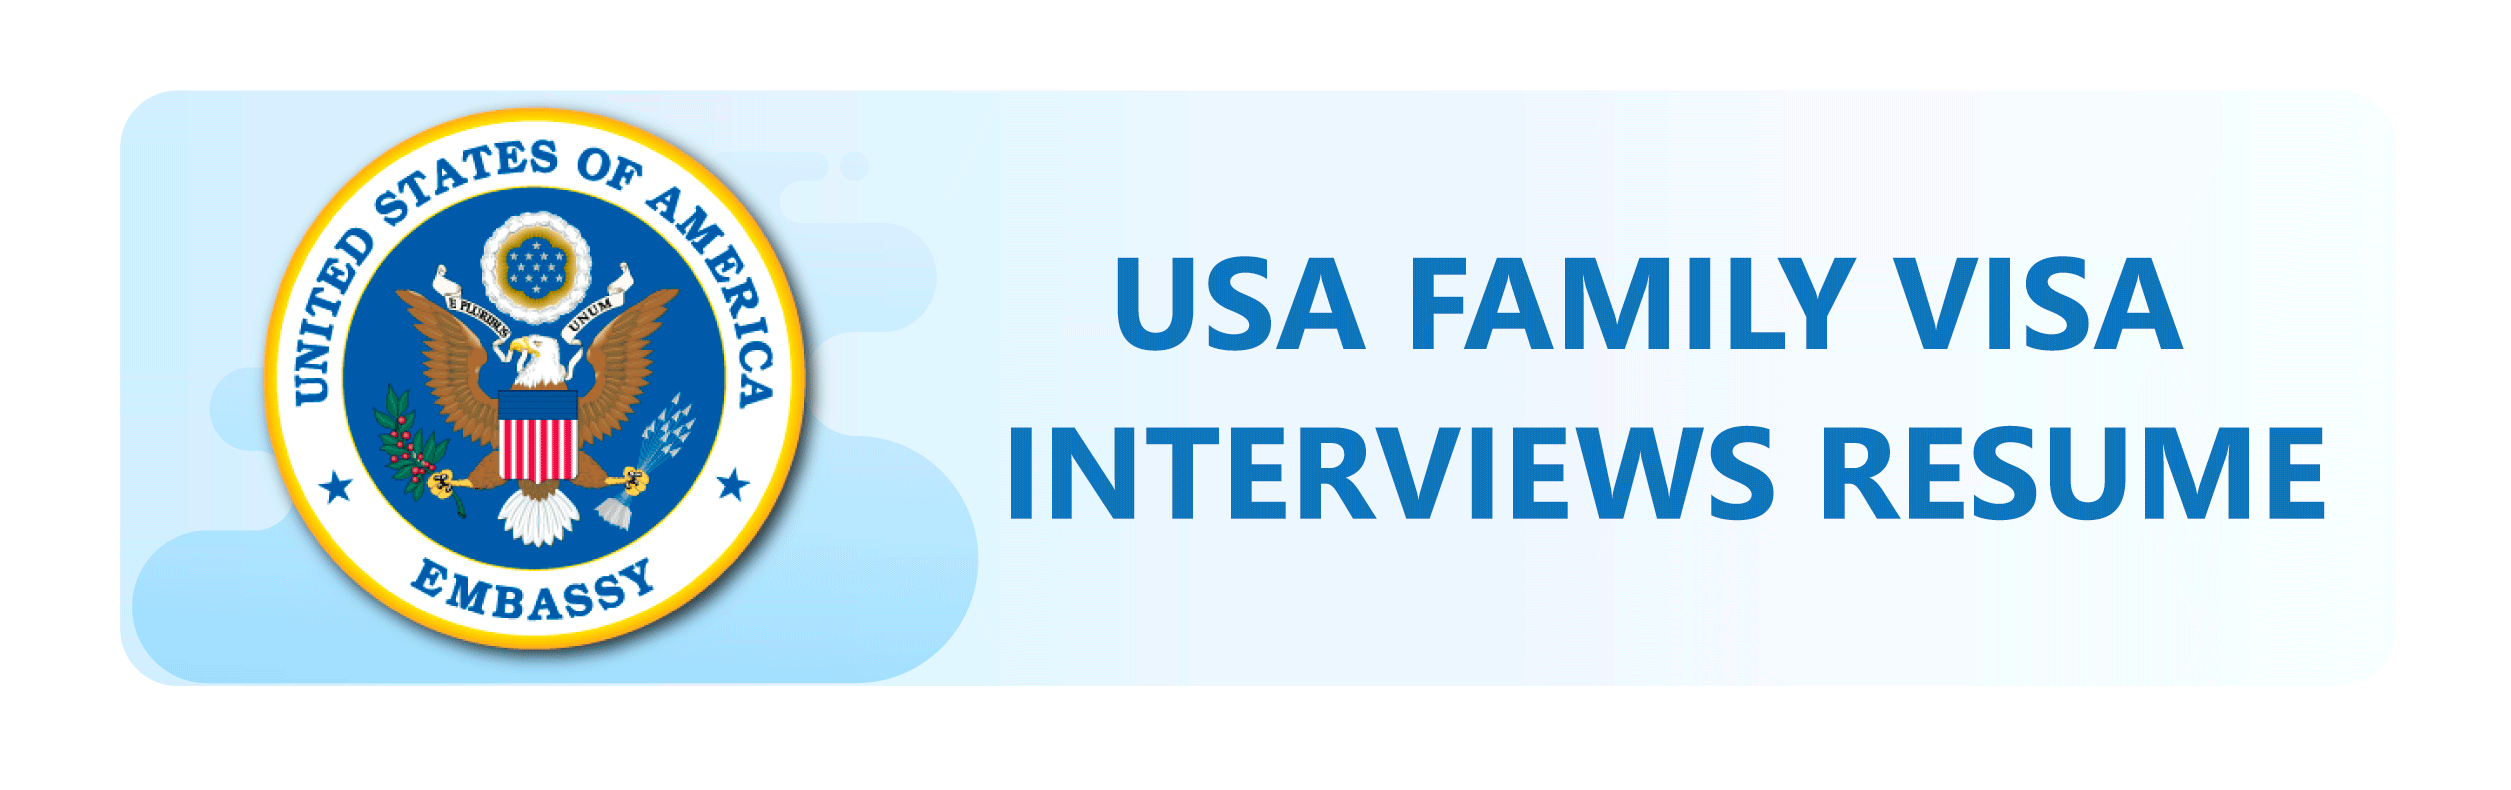 USA family visa interviews resume